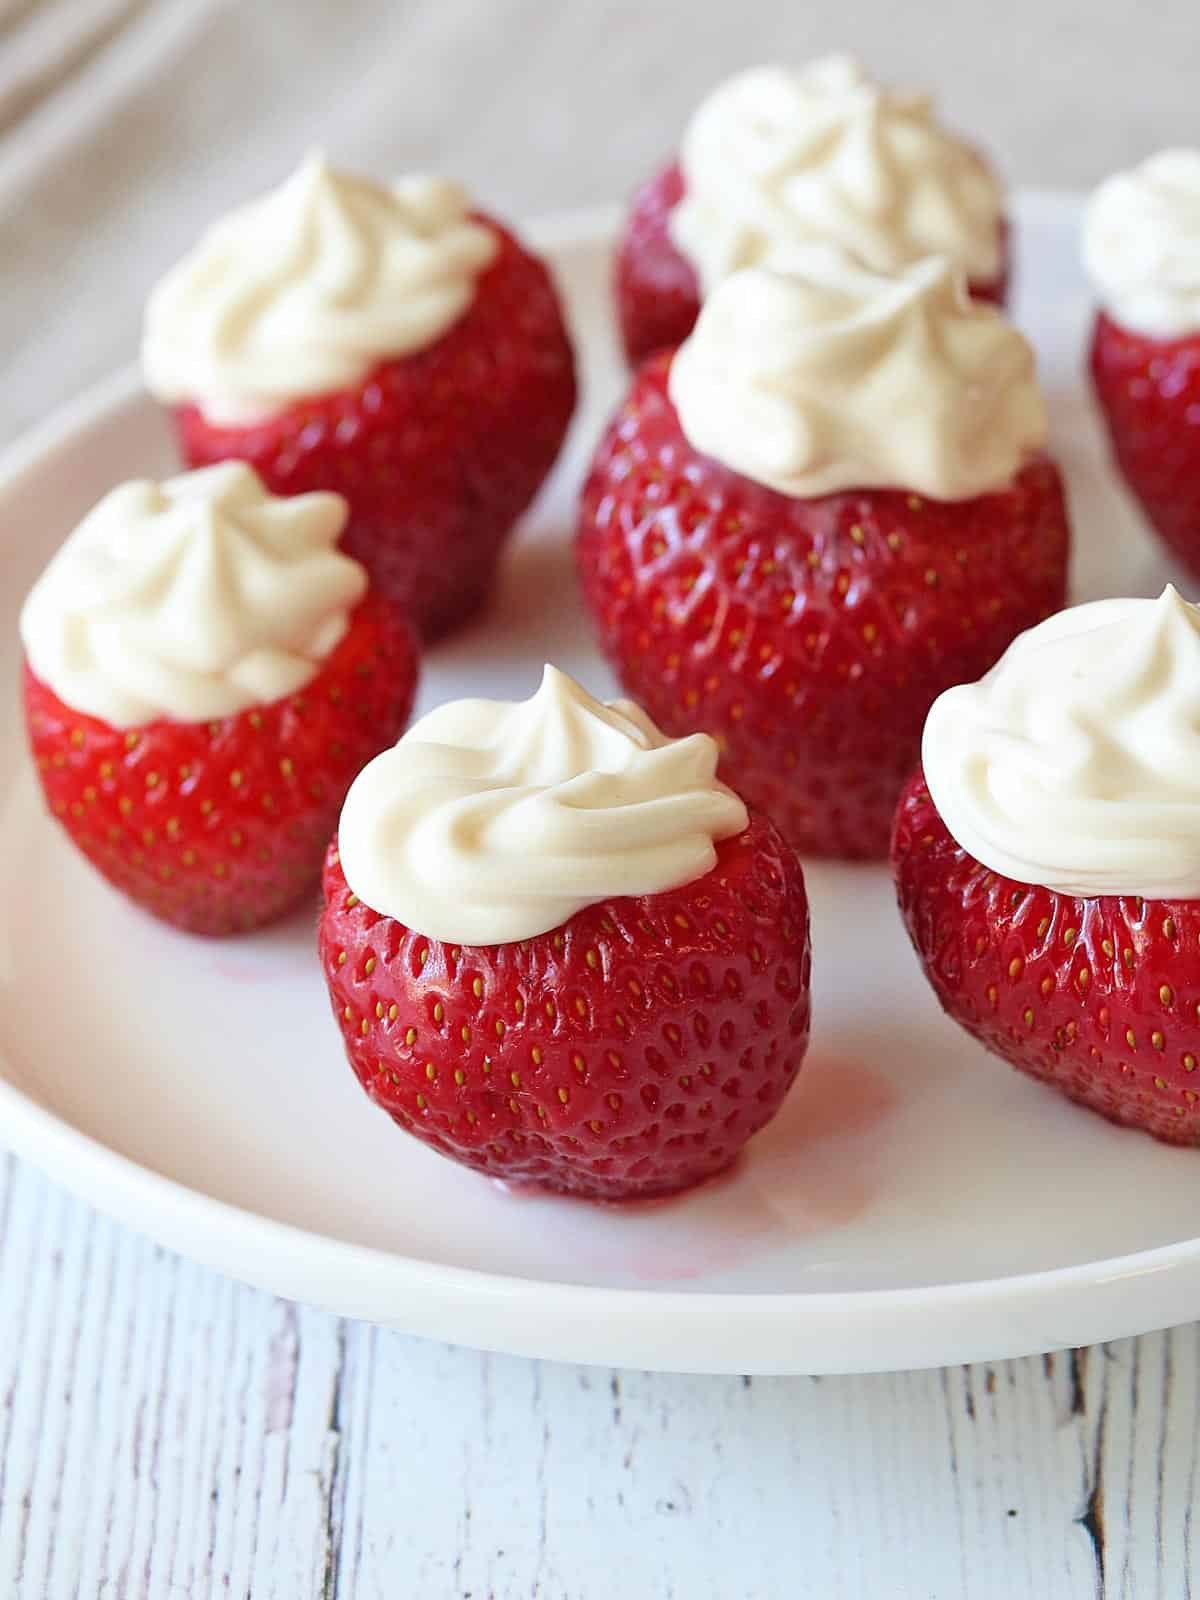 Cheesecake stuffed strawberries  served on a white plate. 